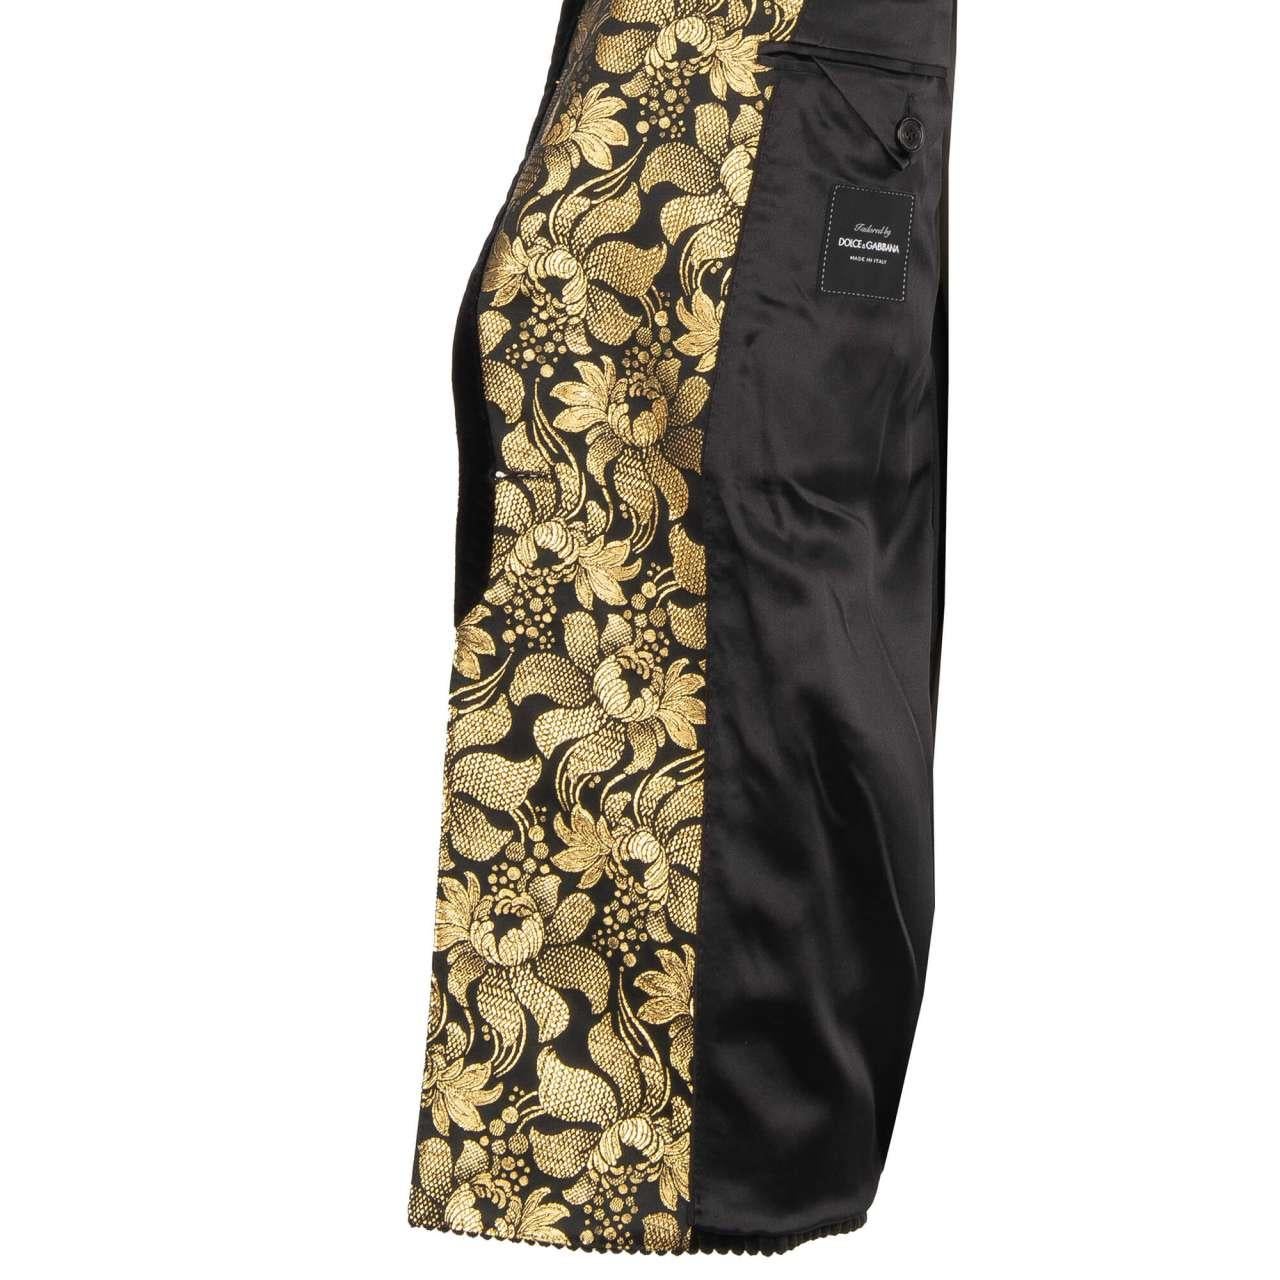 Dolce & Gabbana Floral Corduloy Blazer Tuxedo Jacket Black Gold 46 36 S For Sale 2